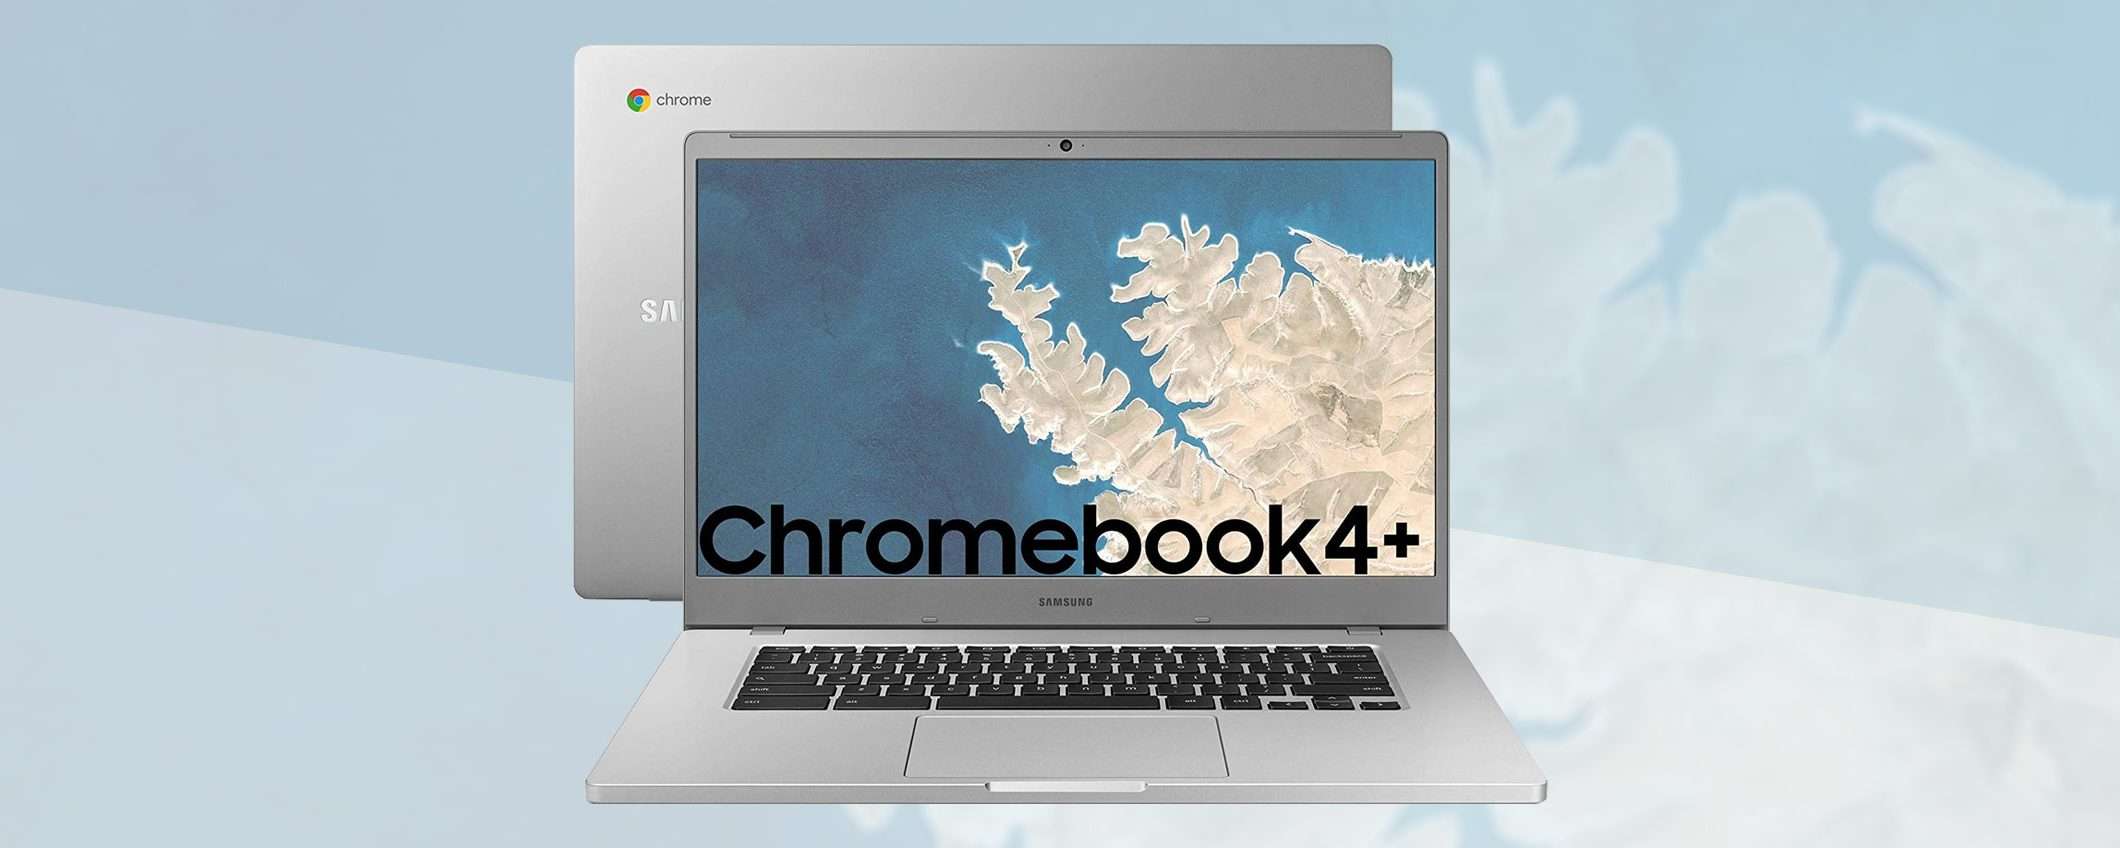 Samsung Chromebook 4+ al minimo storico su Amazon